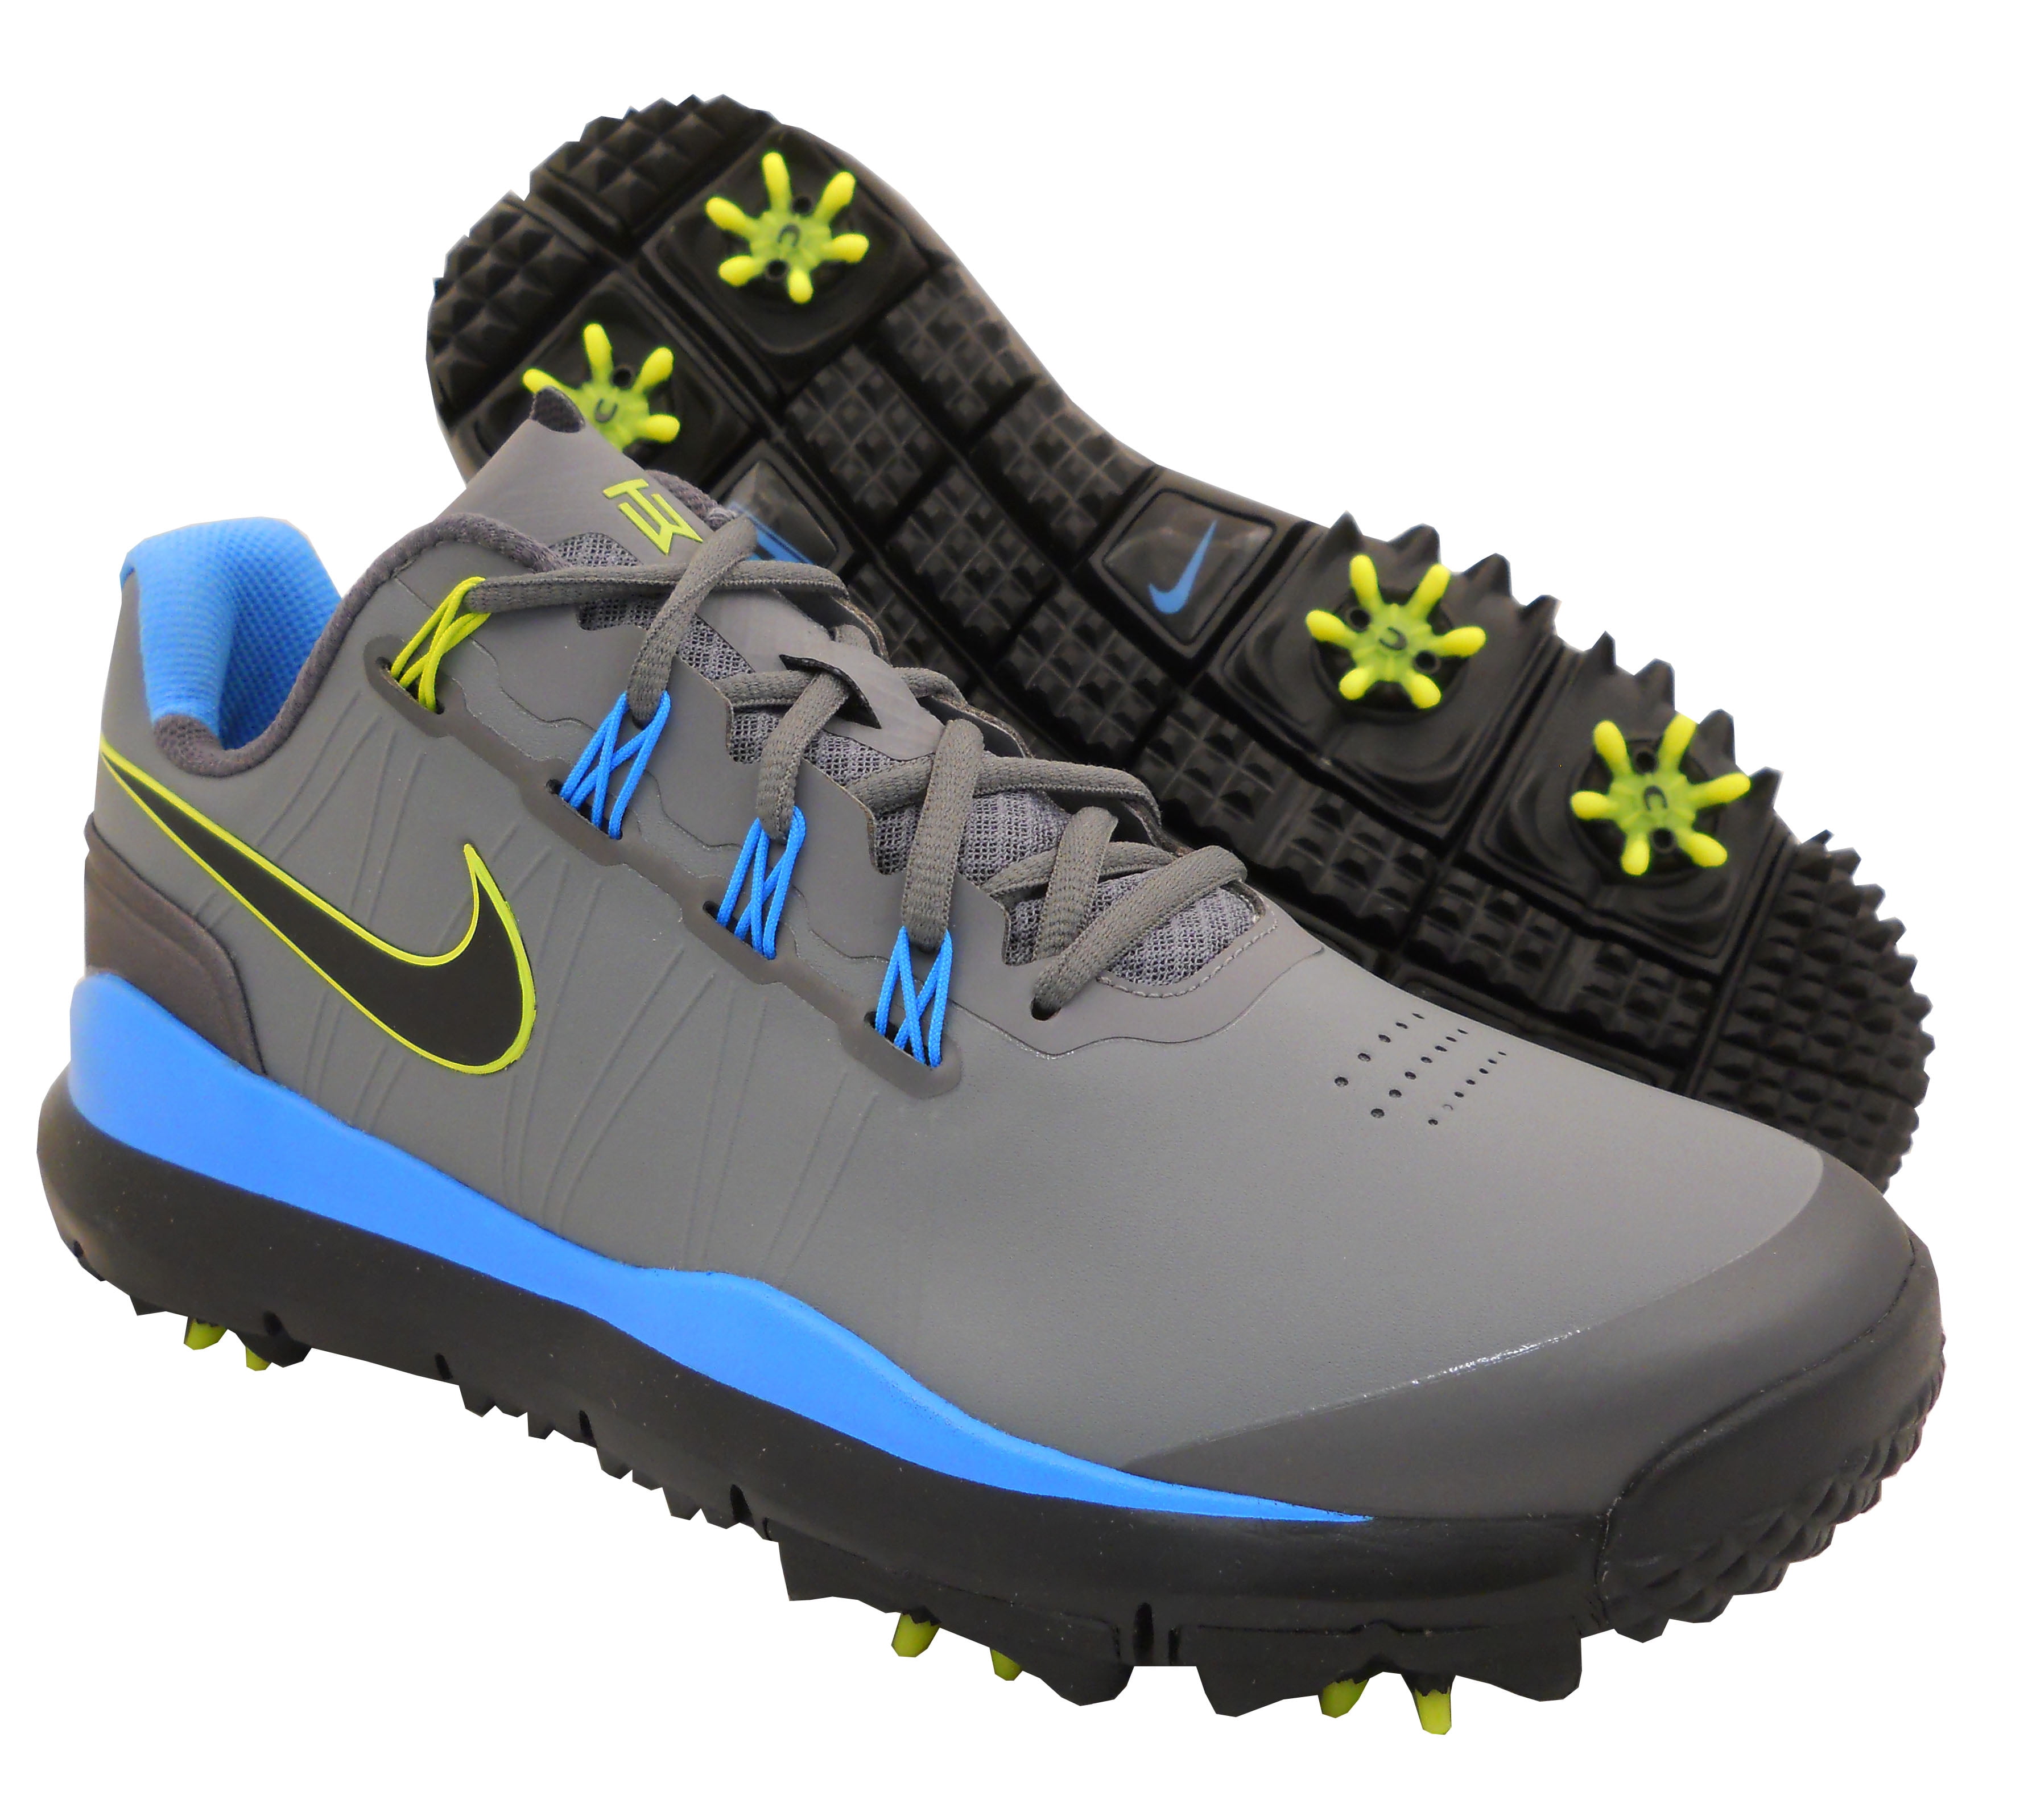 NEW 2014 Mens Nike TW Woods '14 Golf Shoes Gray/Blue/Lime 9 M - Ret $220 Walmart.com